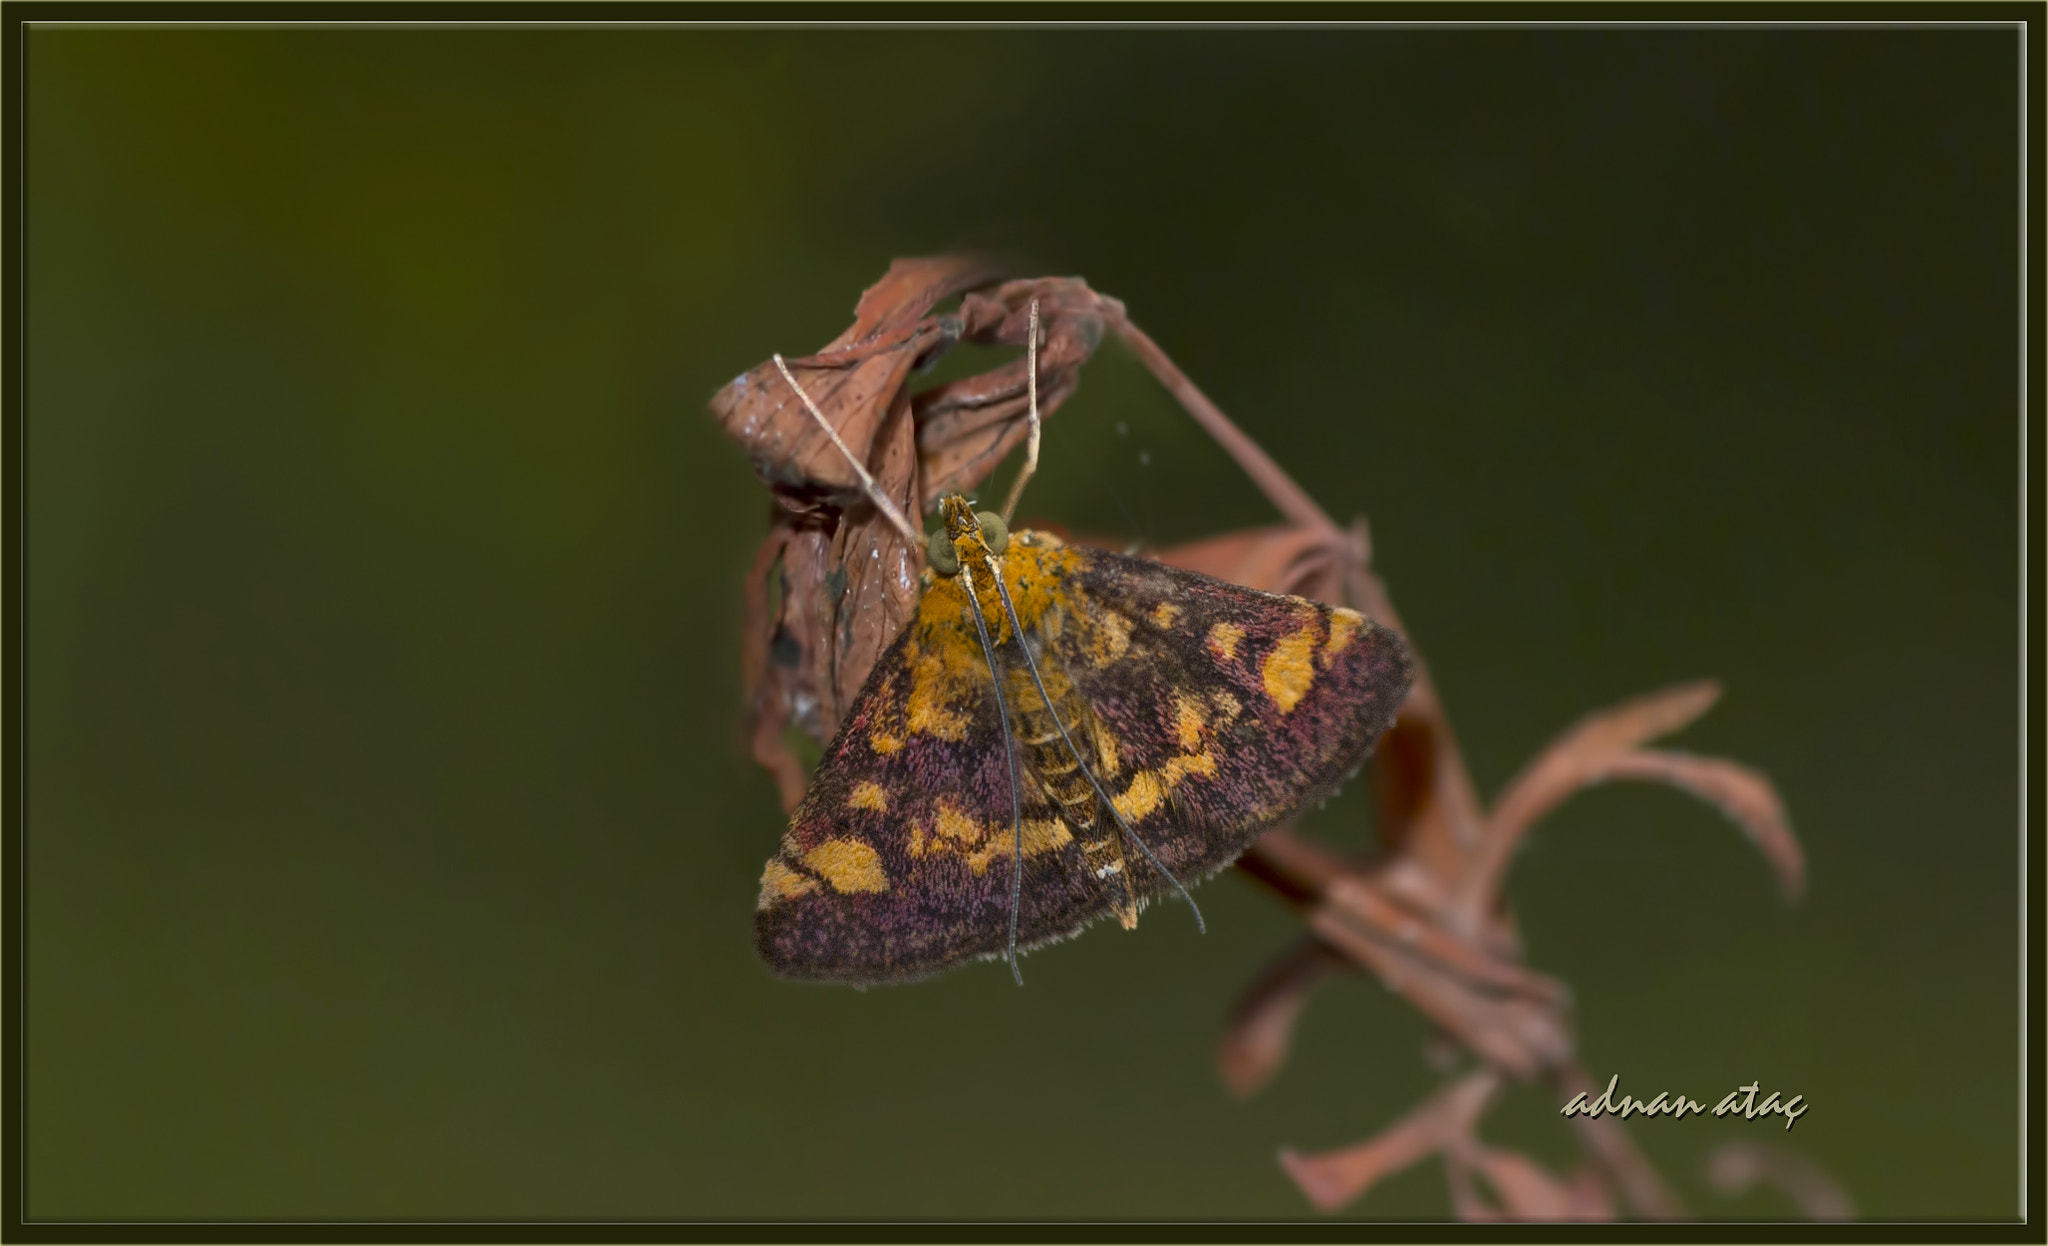 AF Zoom-Micro Nikkor 70-180mm f/4.5-5.6D ED sample photo. Nane güvesi - pyrausta aurata - mint moth - small purple and gold moth photography